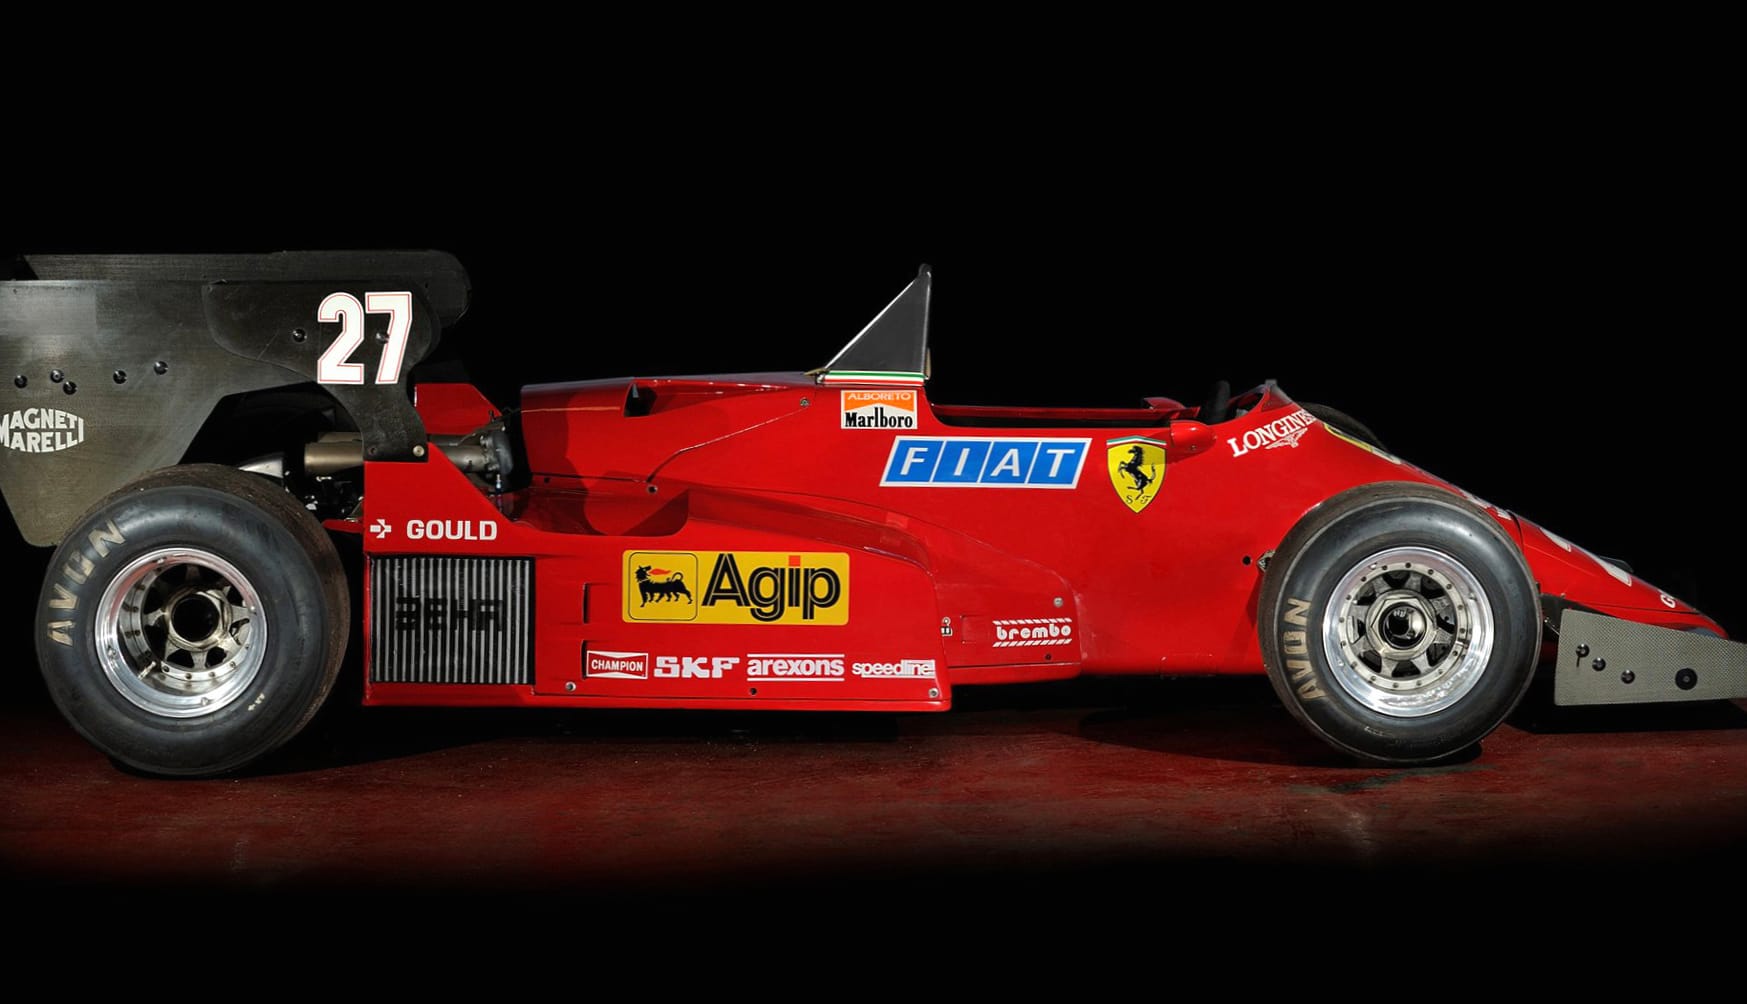 Ferrari 126 C4 at 1280 x 960 size wallpapers HD quality